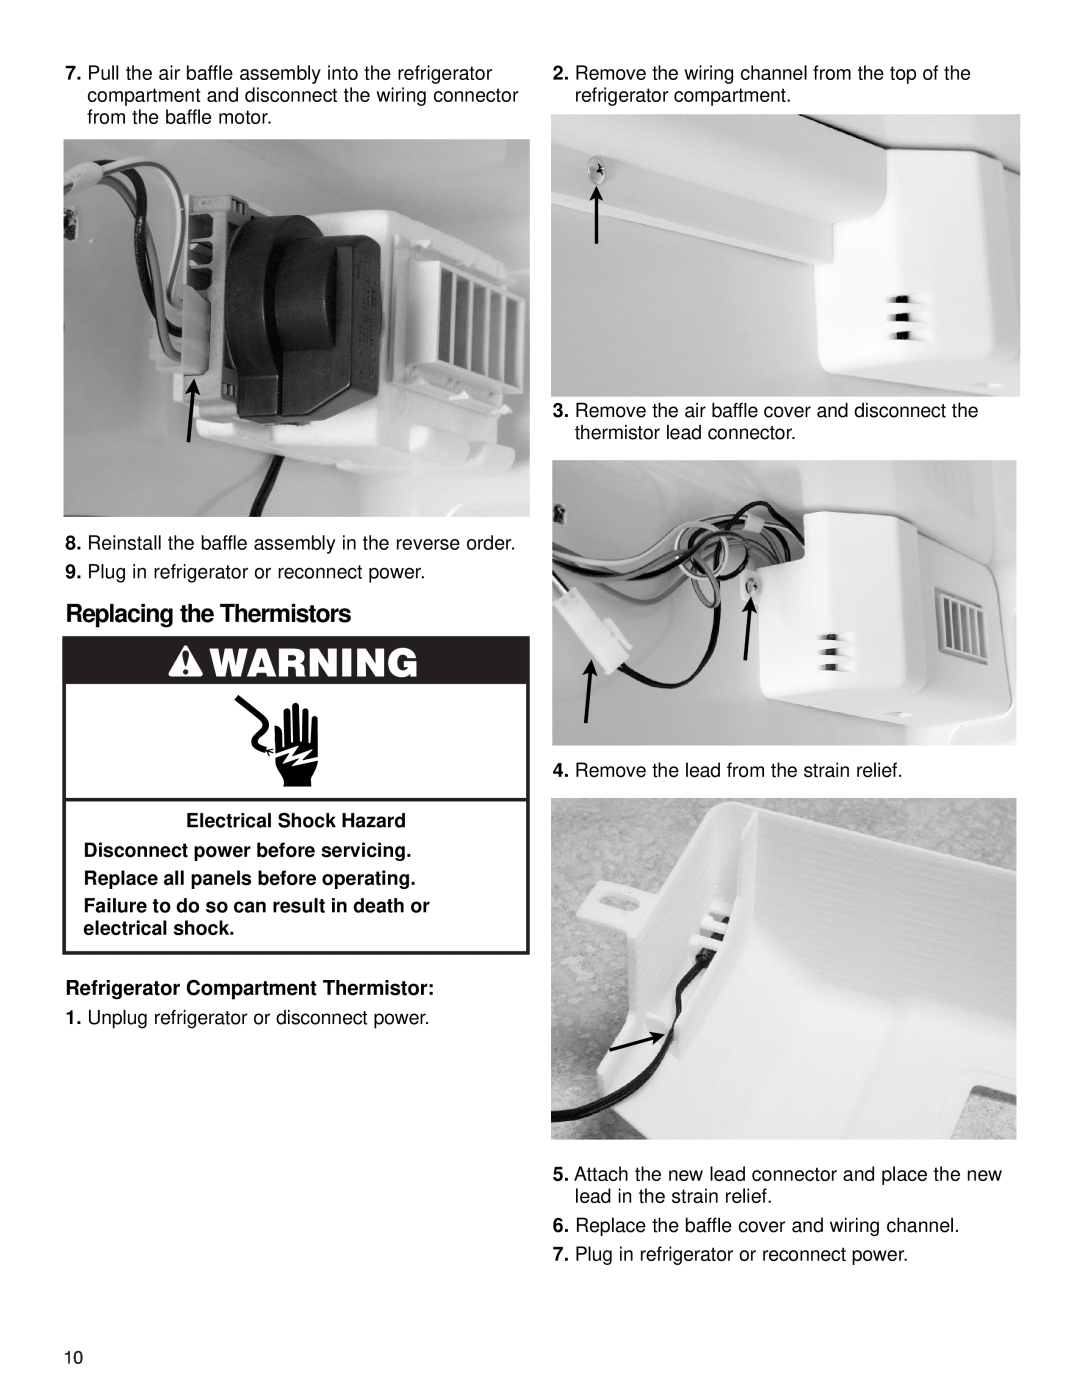 KitchenAid KSRA22FK manual Replacing the Thermistors, Refrigerator Compartment Thermistor, w WARNING 